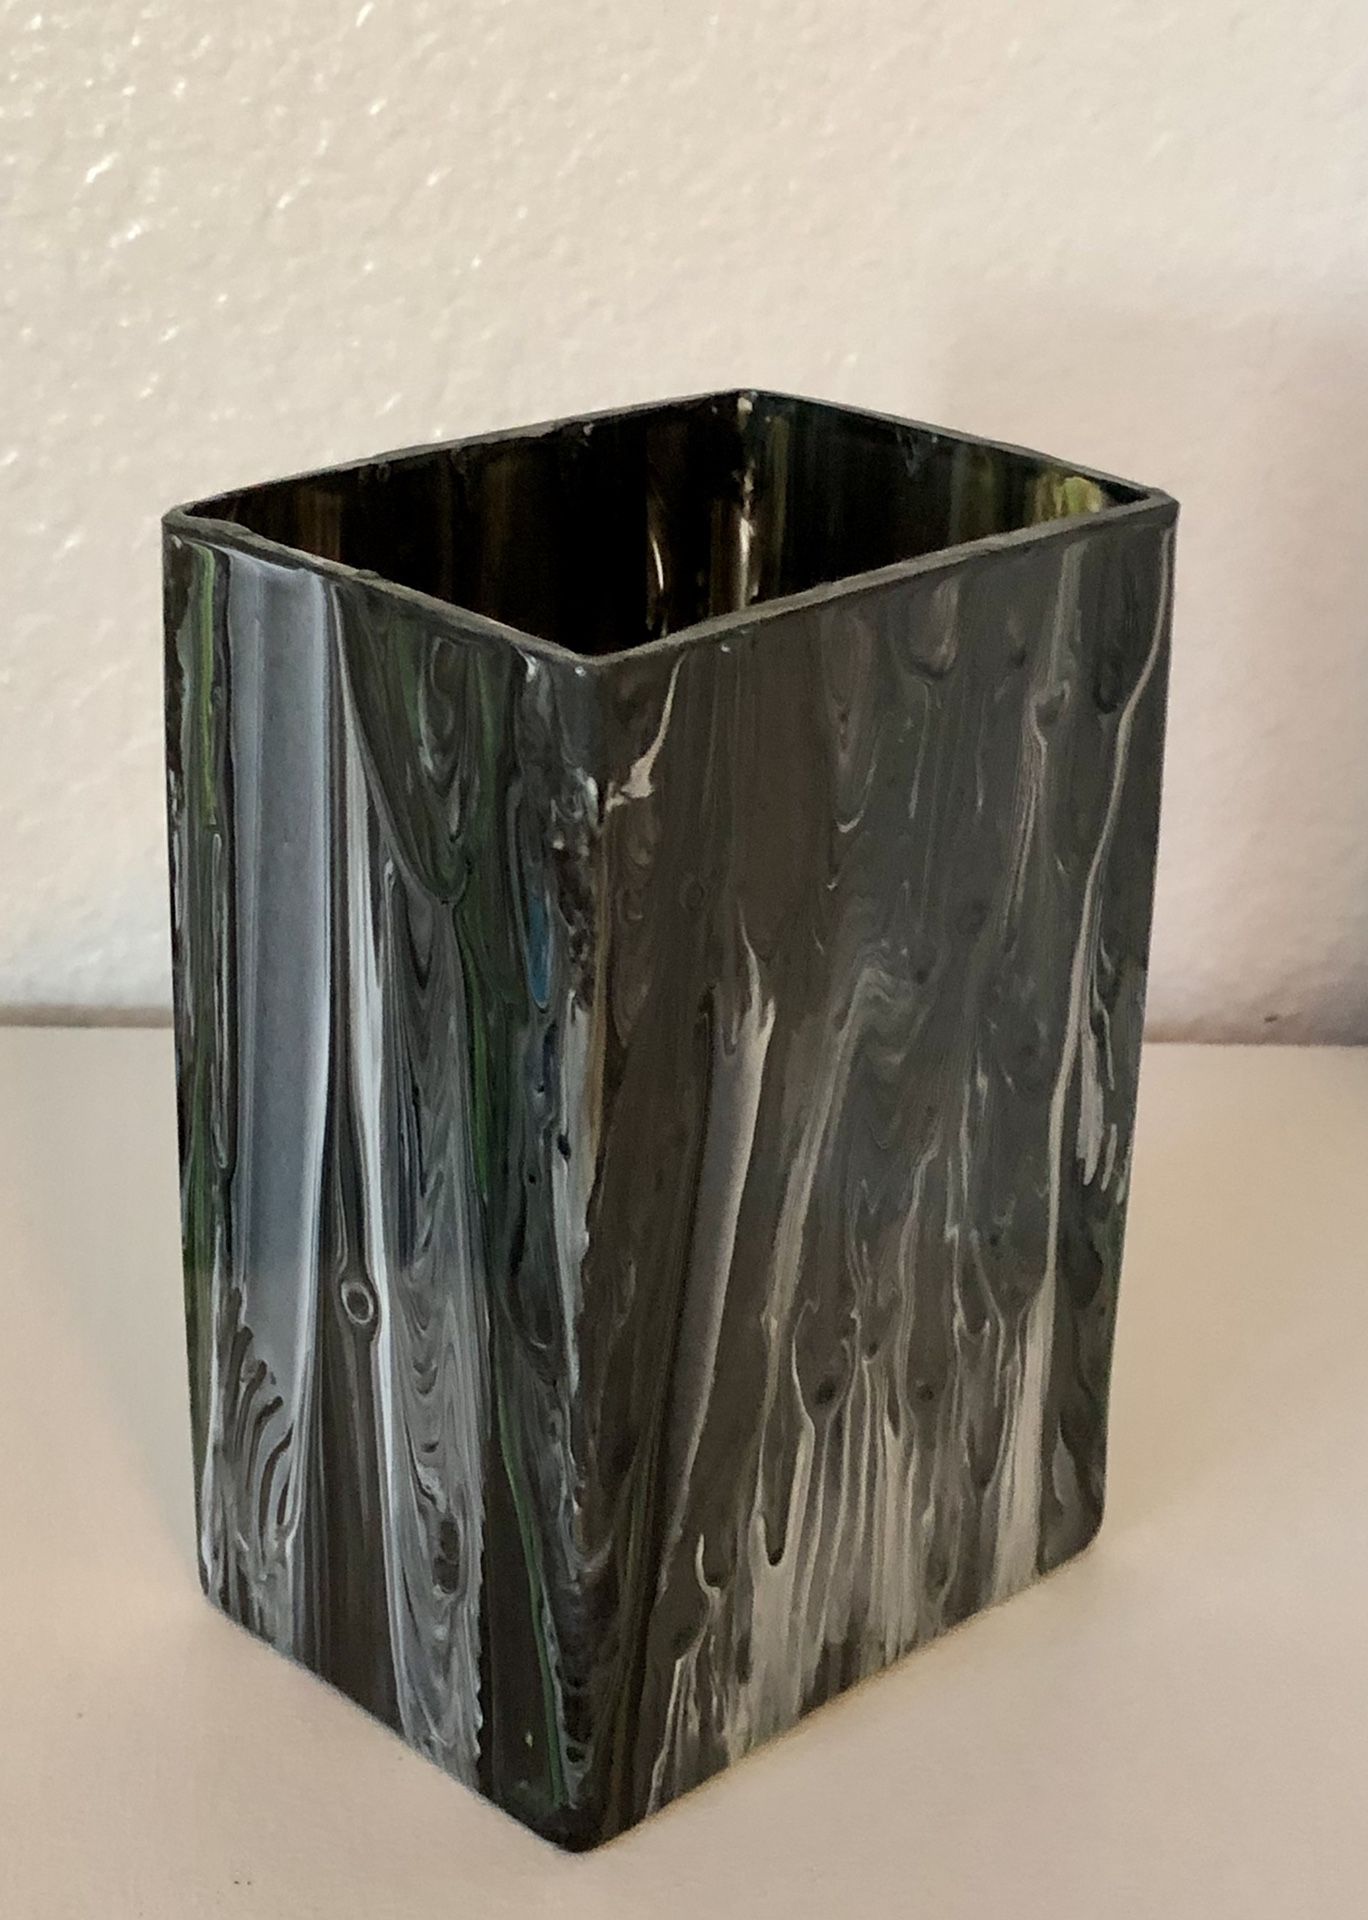 New: Glass Painted Triangular Vase, Size: 6”x 4” x 3”